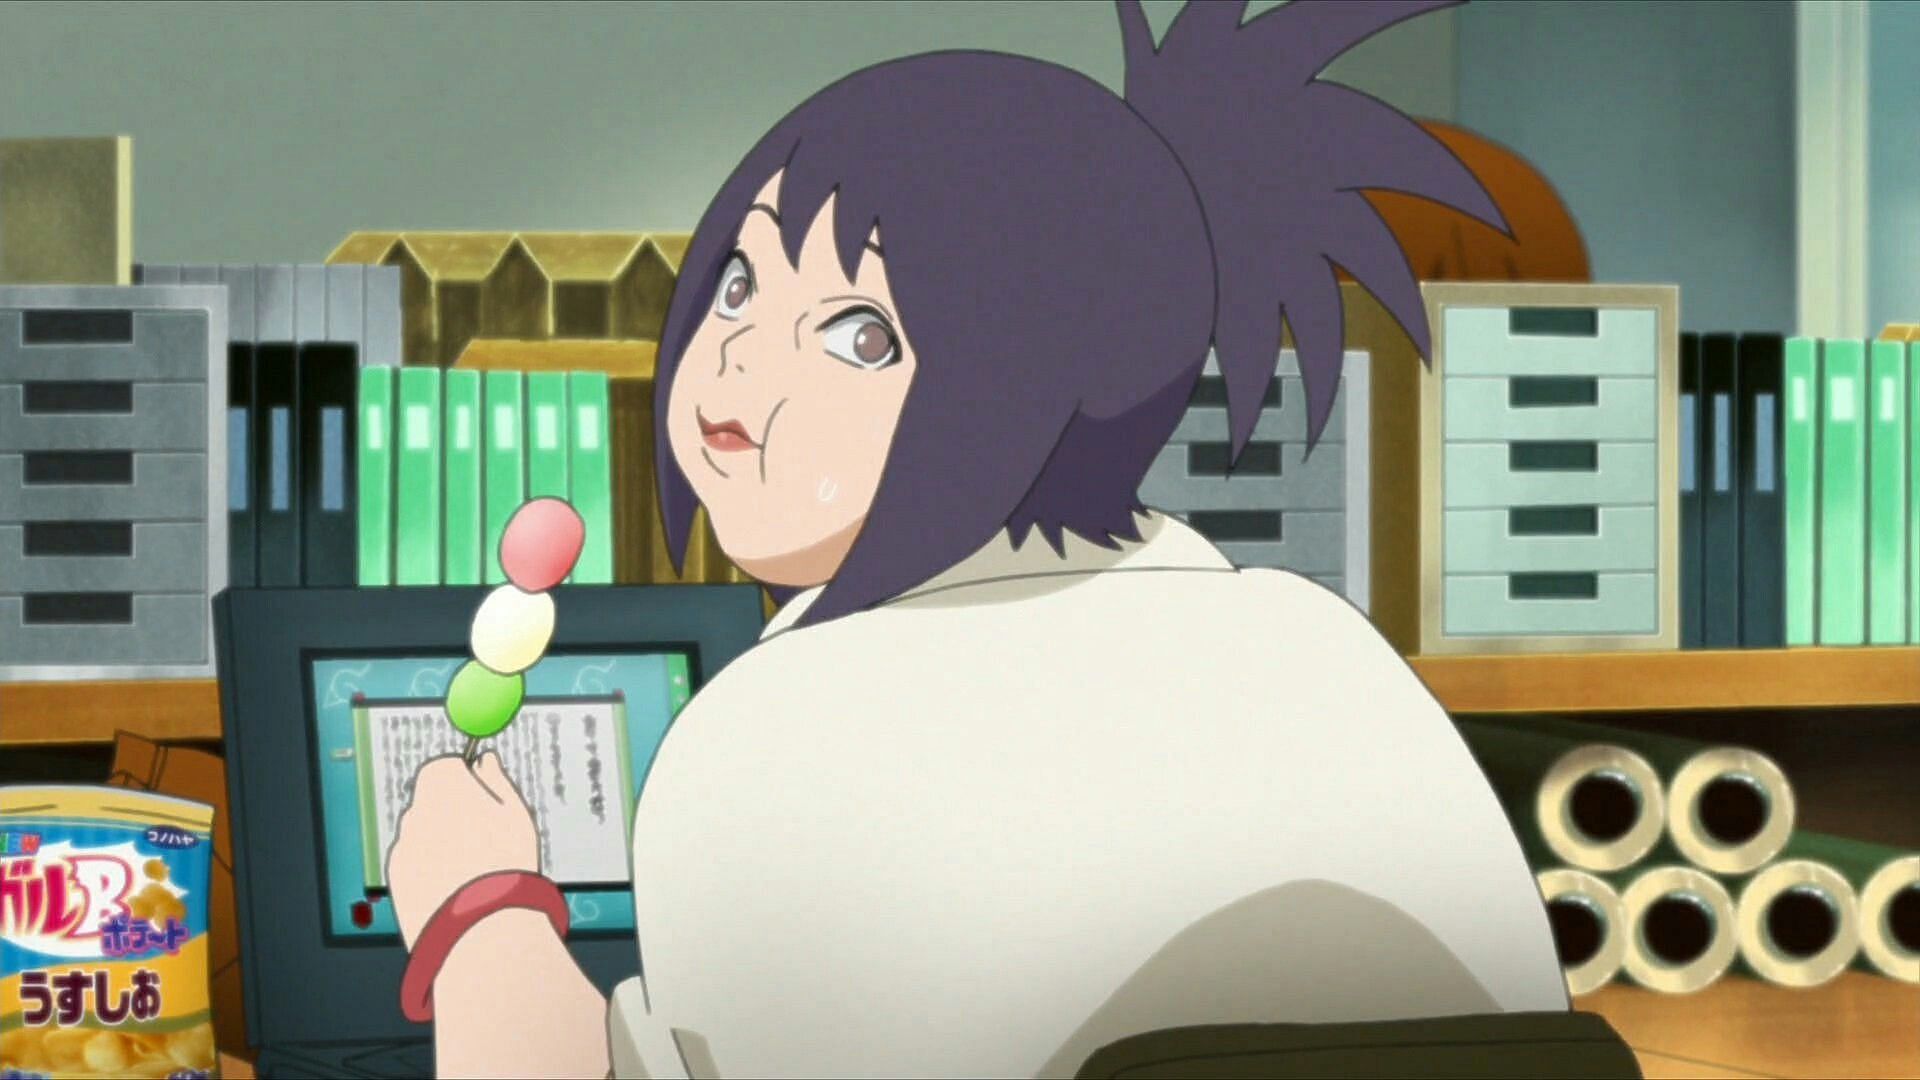 Anko as shown in the anime (Image via Naruto)